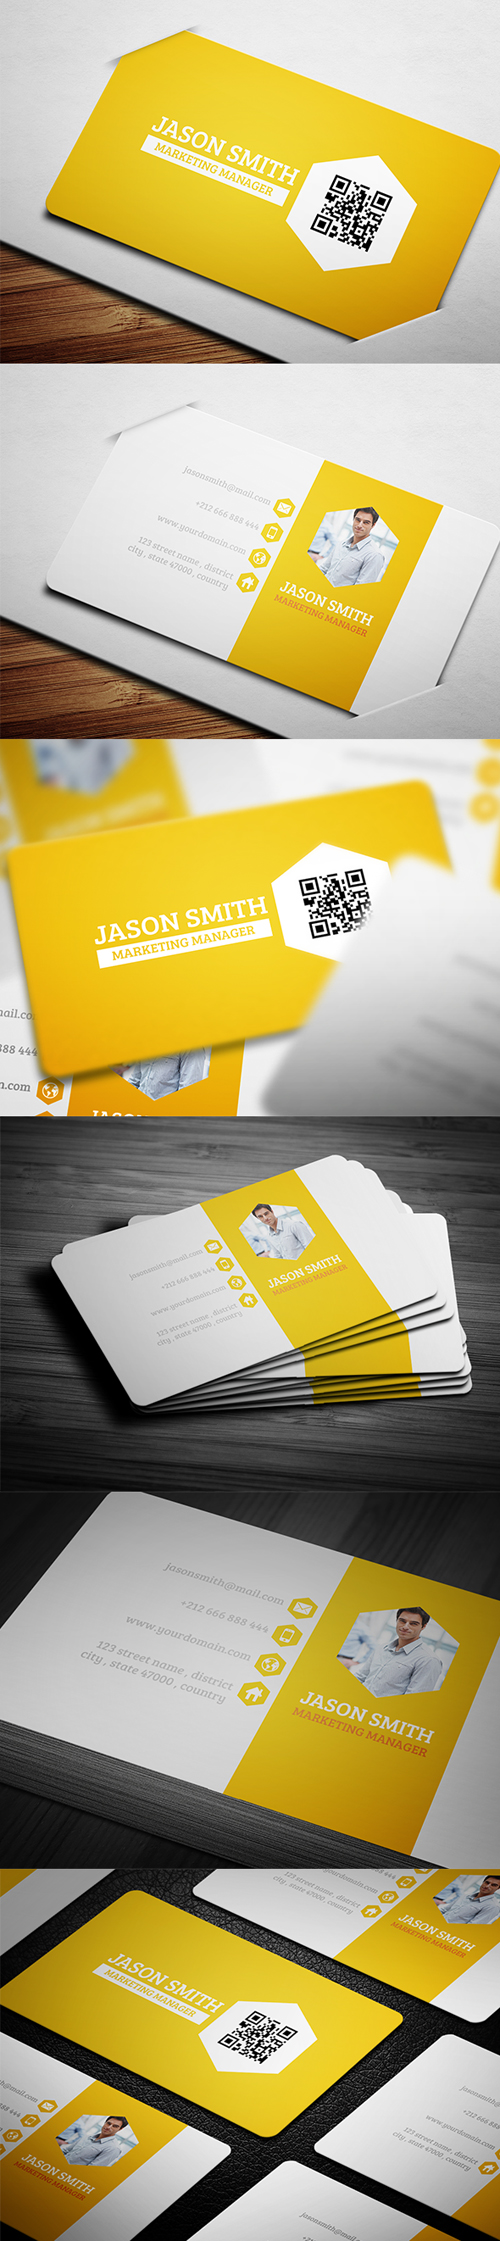 business cards template design - 4